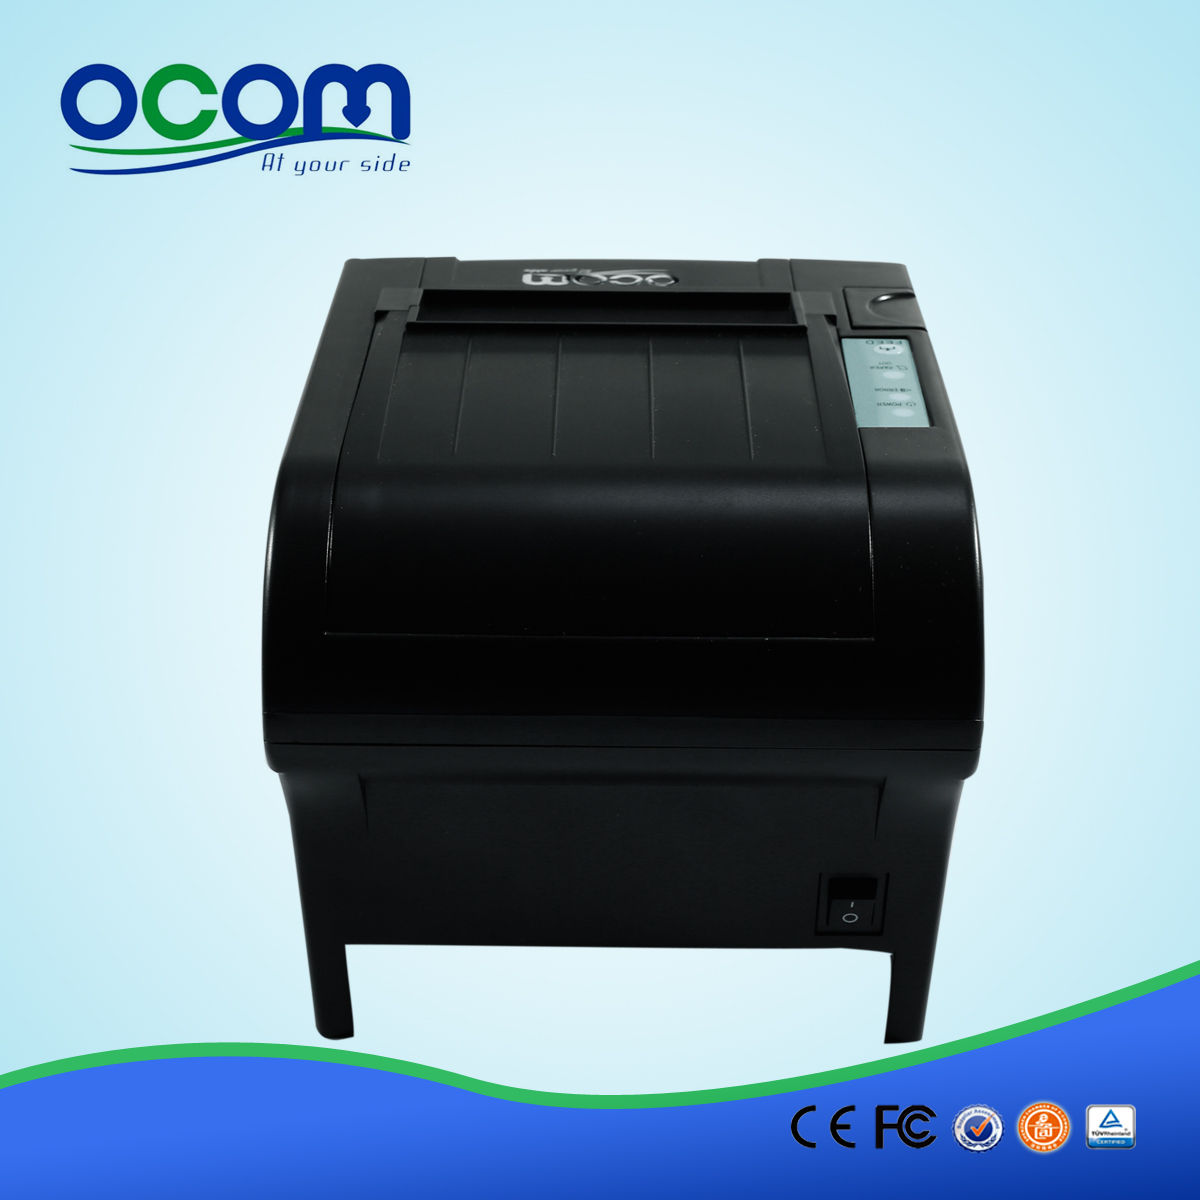 3 Inch Wifi Thermal Receipt Printer OCPP-806-W